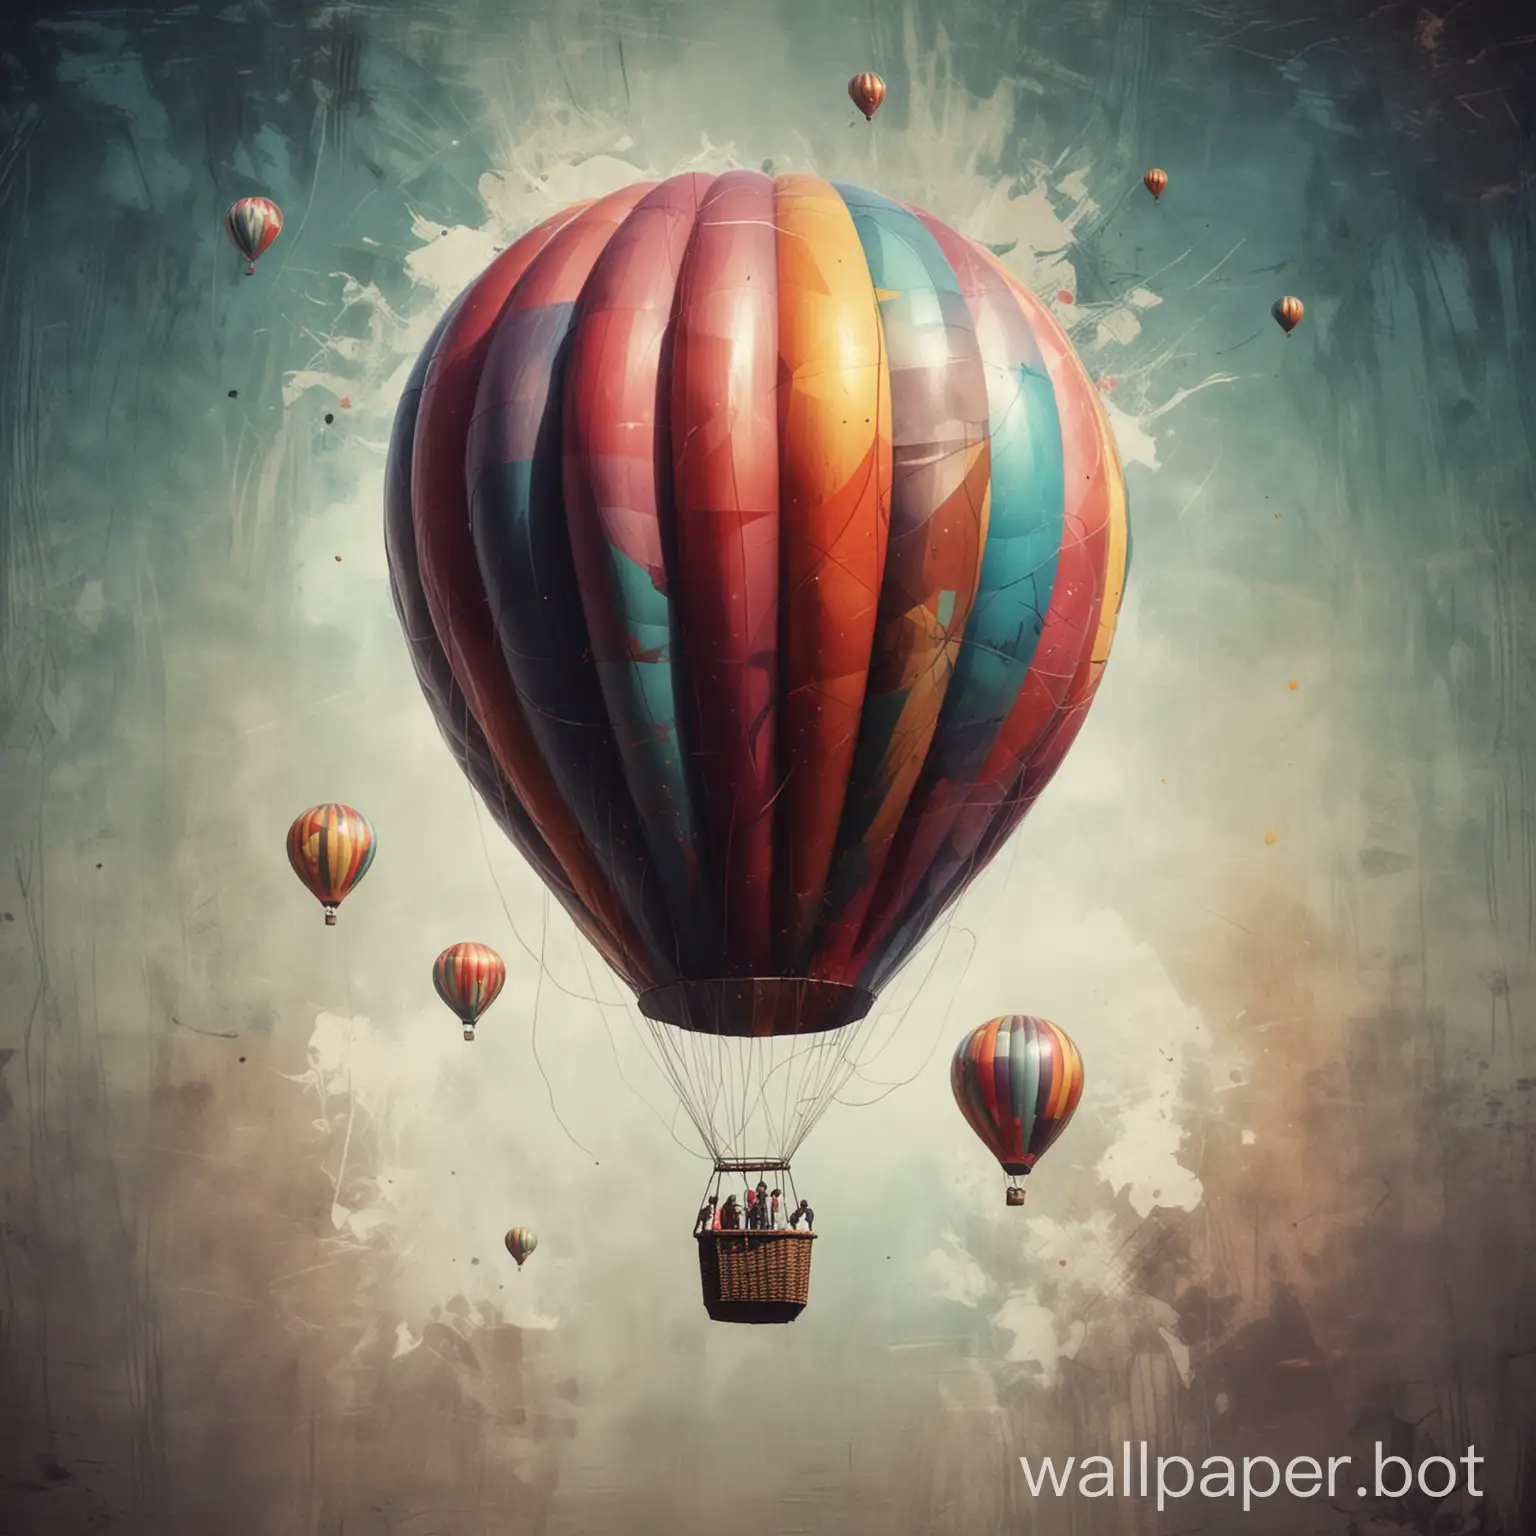 Vibrant-Abstract-Art-Featuring-a-Hot-Air-Balloon